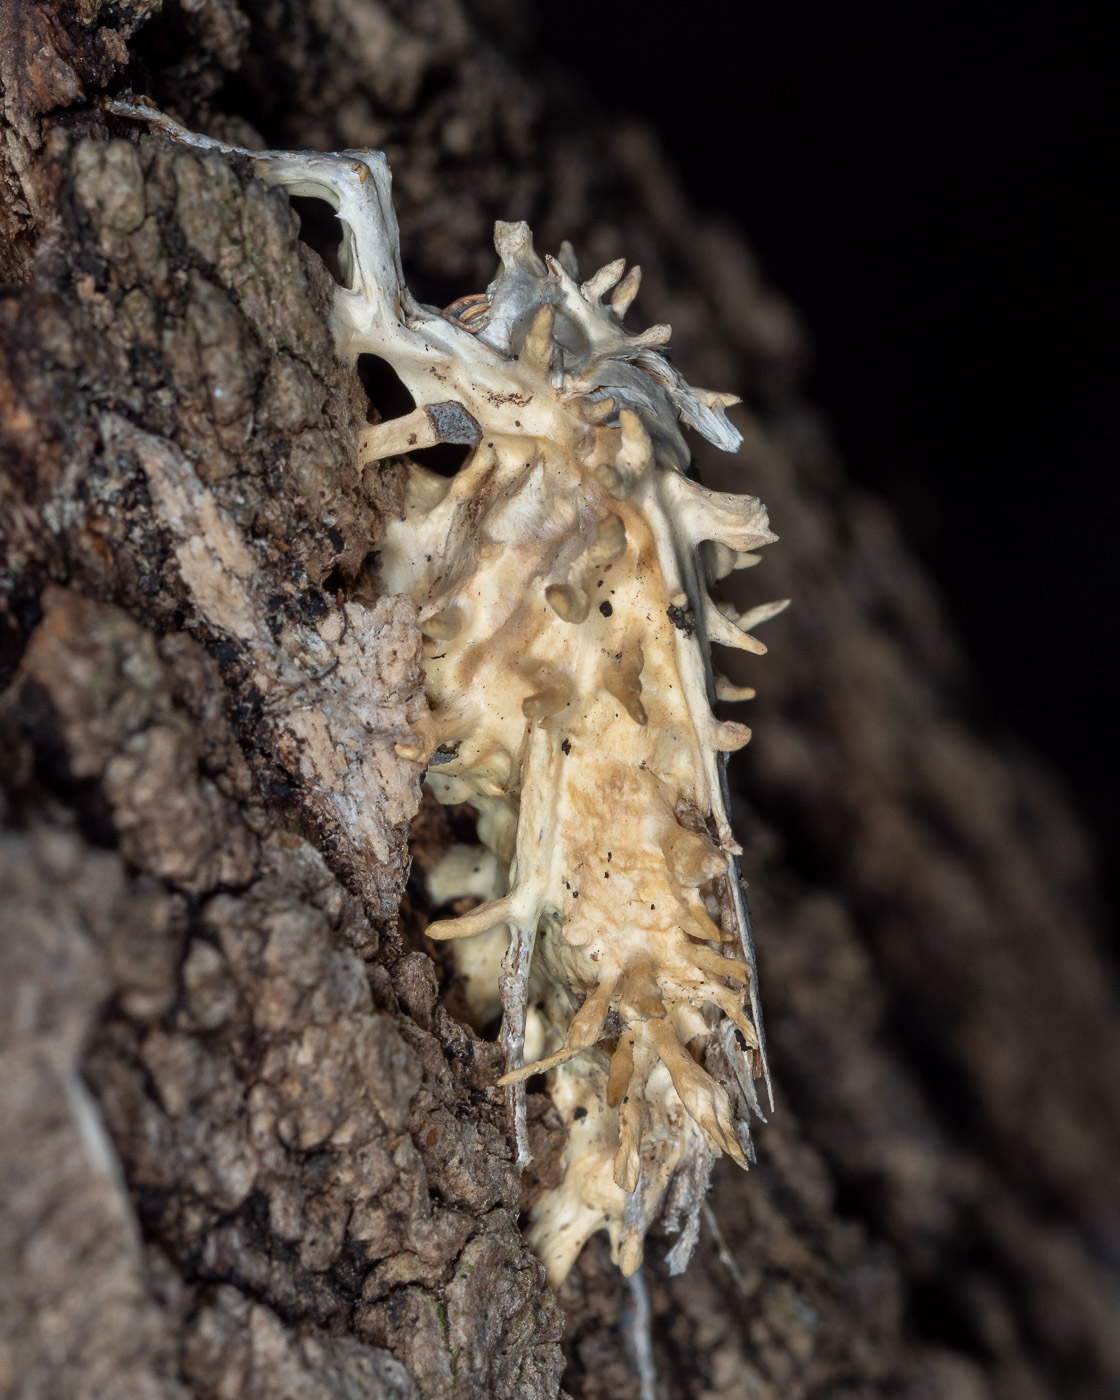 Parasitized Moth Zombie on Tree Trunk